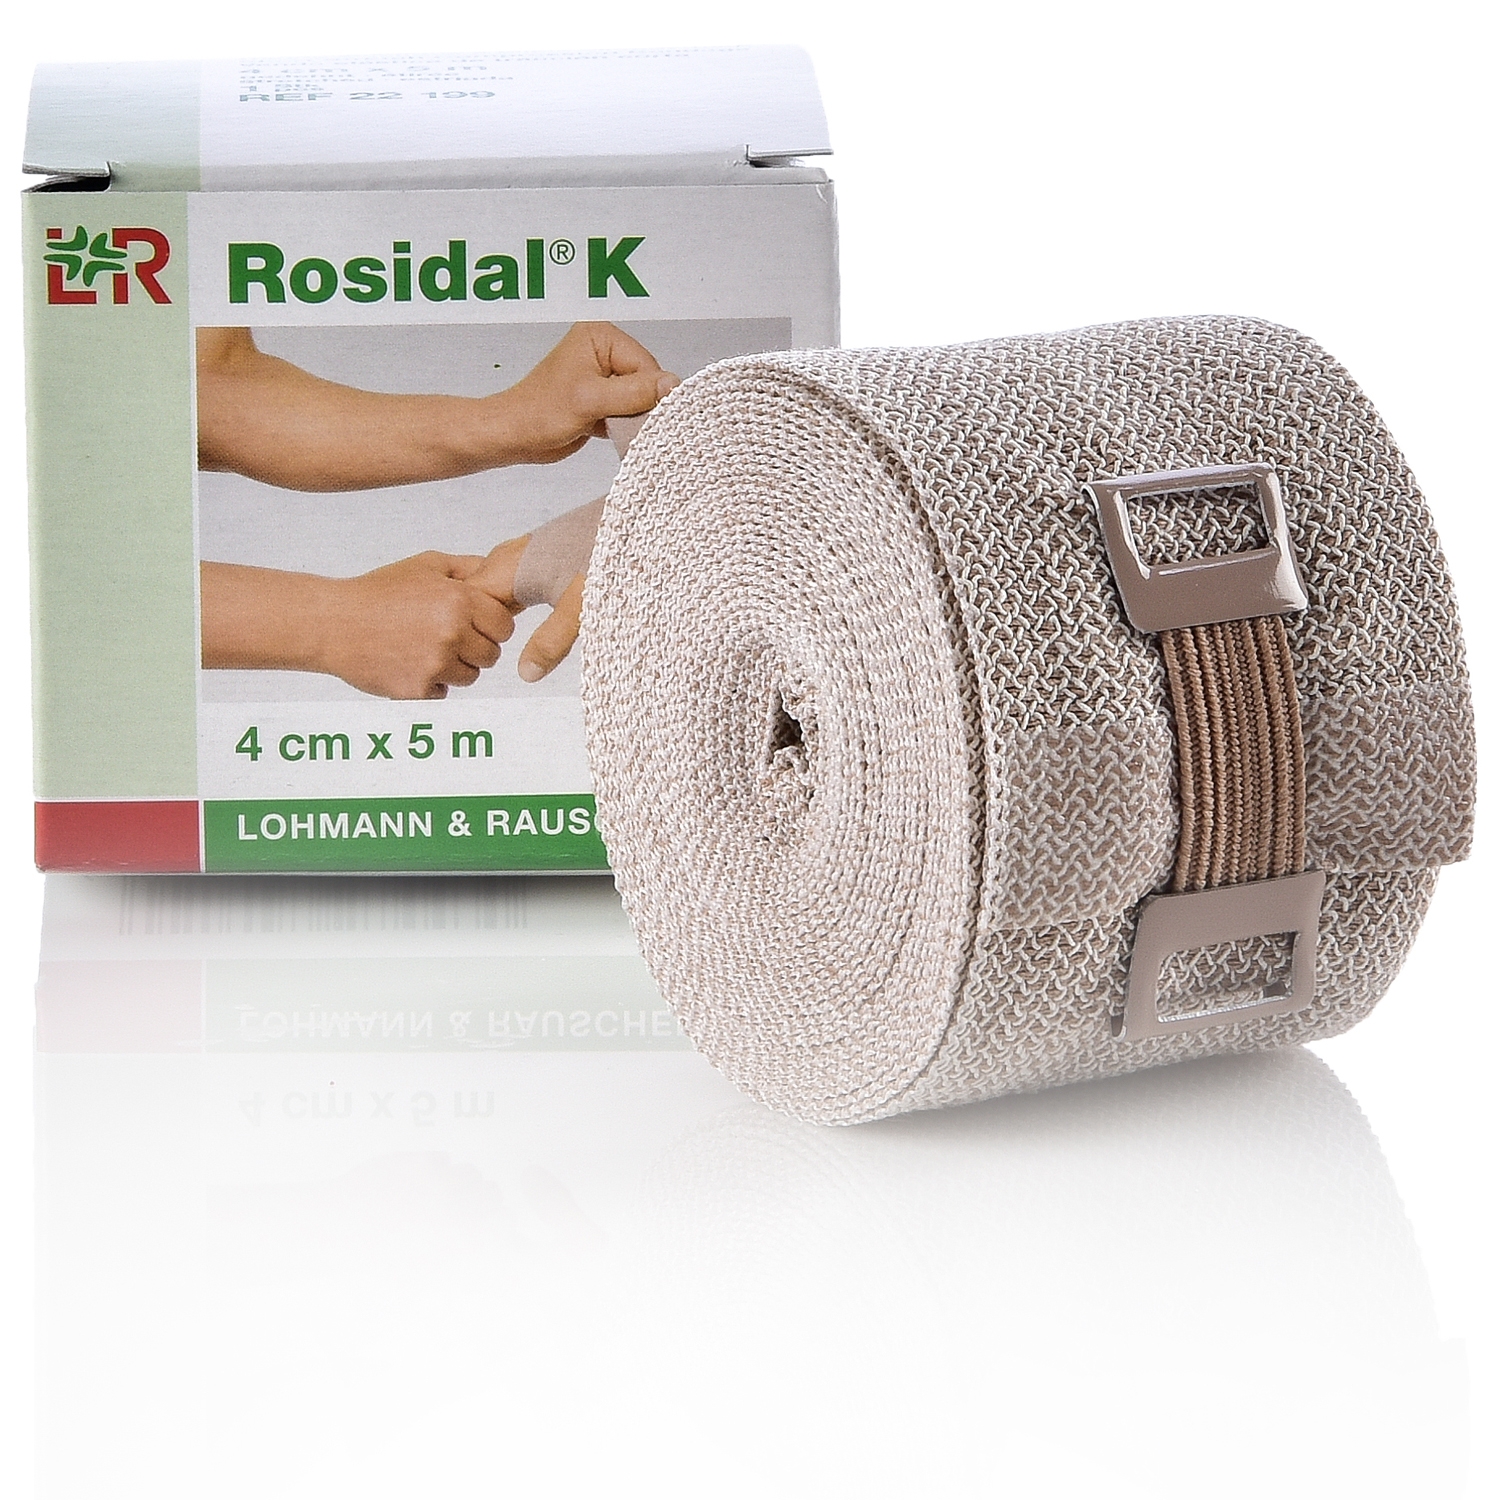 Rosidal K - 4 cm x 5 m